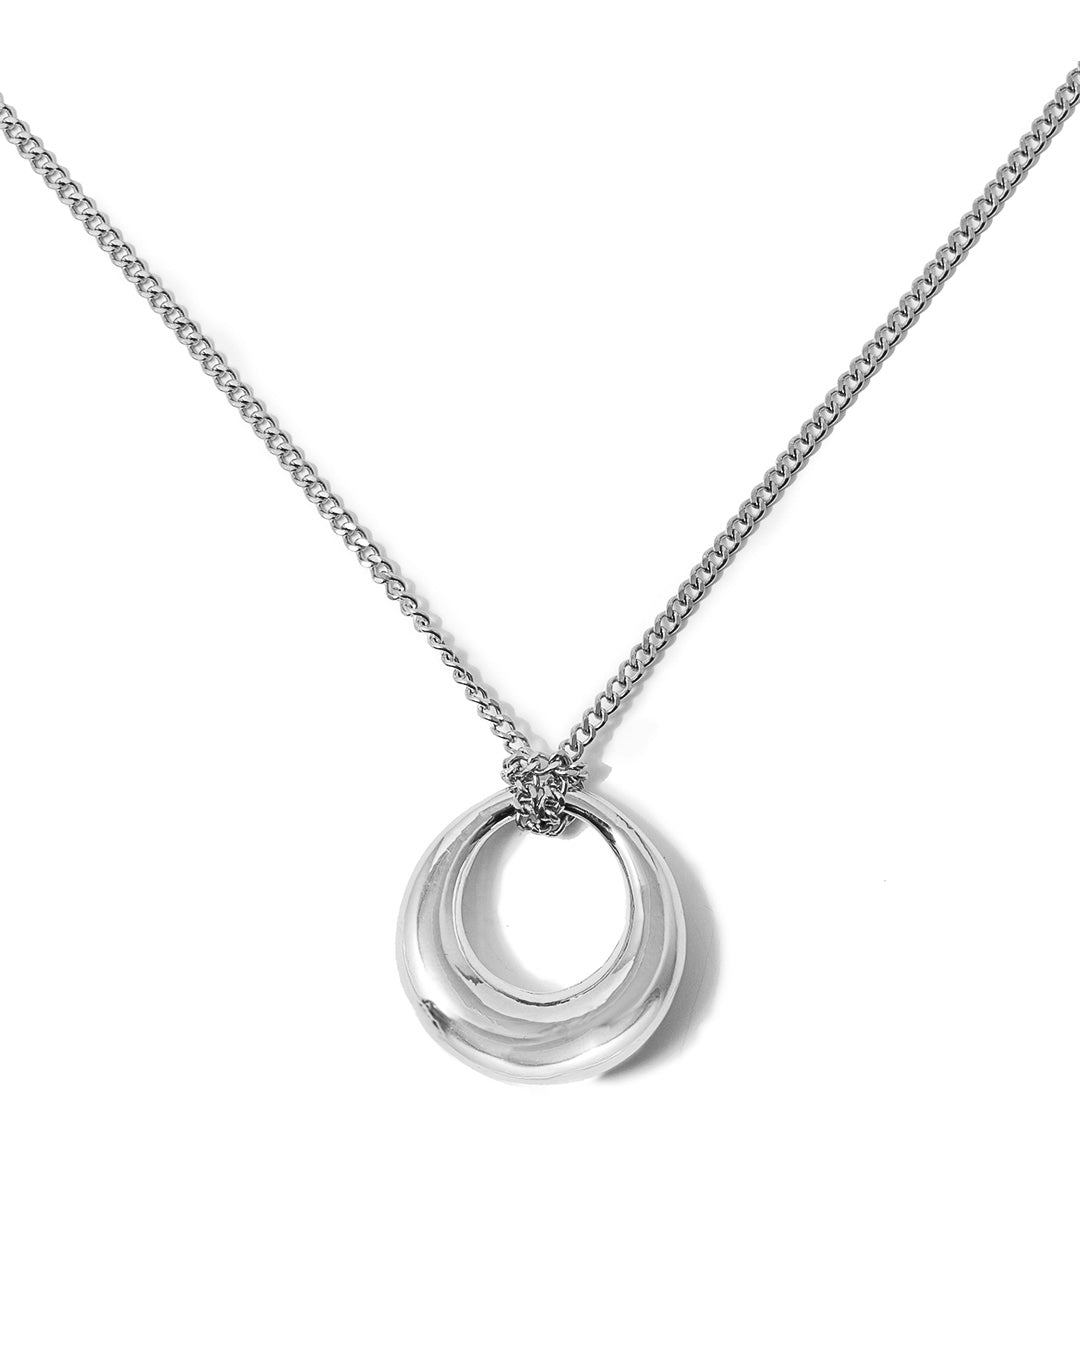 Domeo Silver Necklace